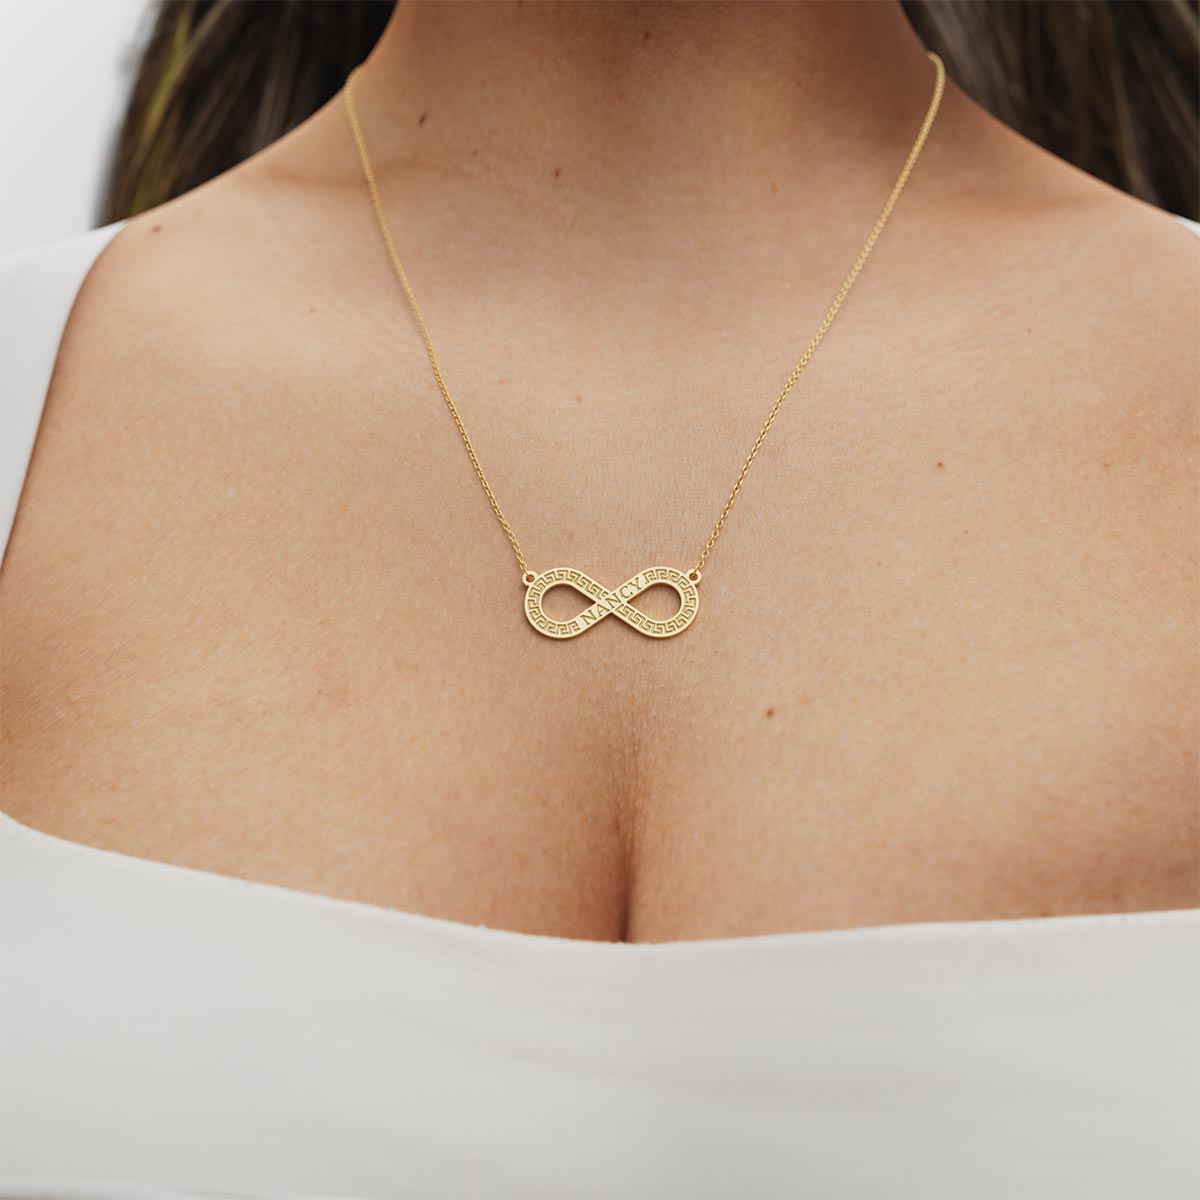 Personalized Greek Key Infinity Name Necklace